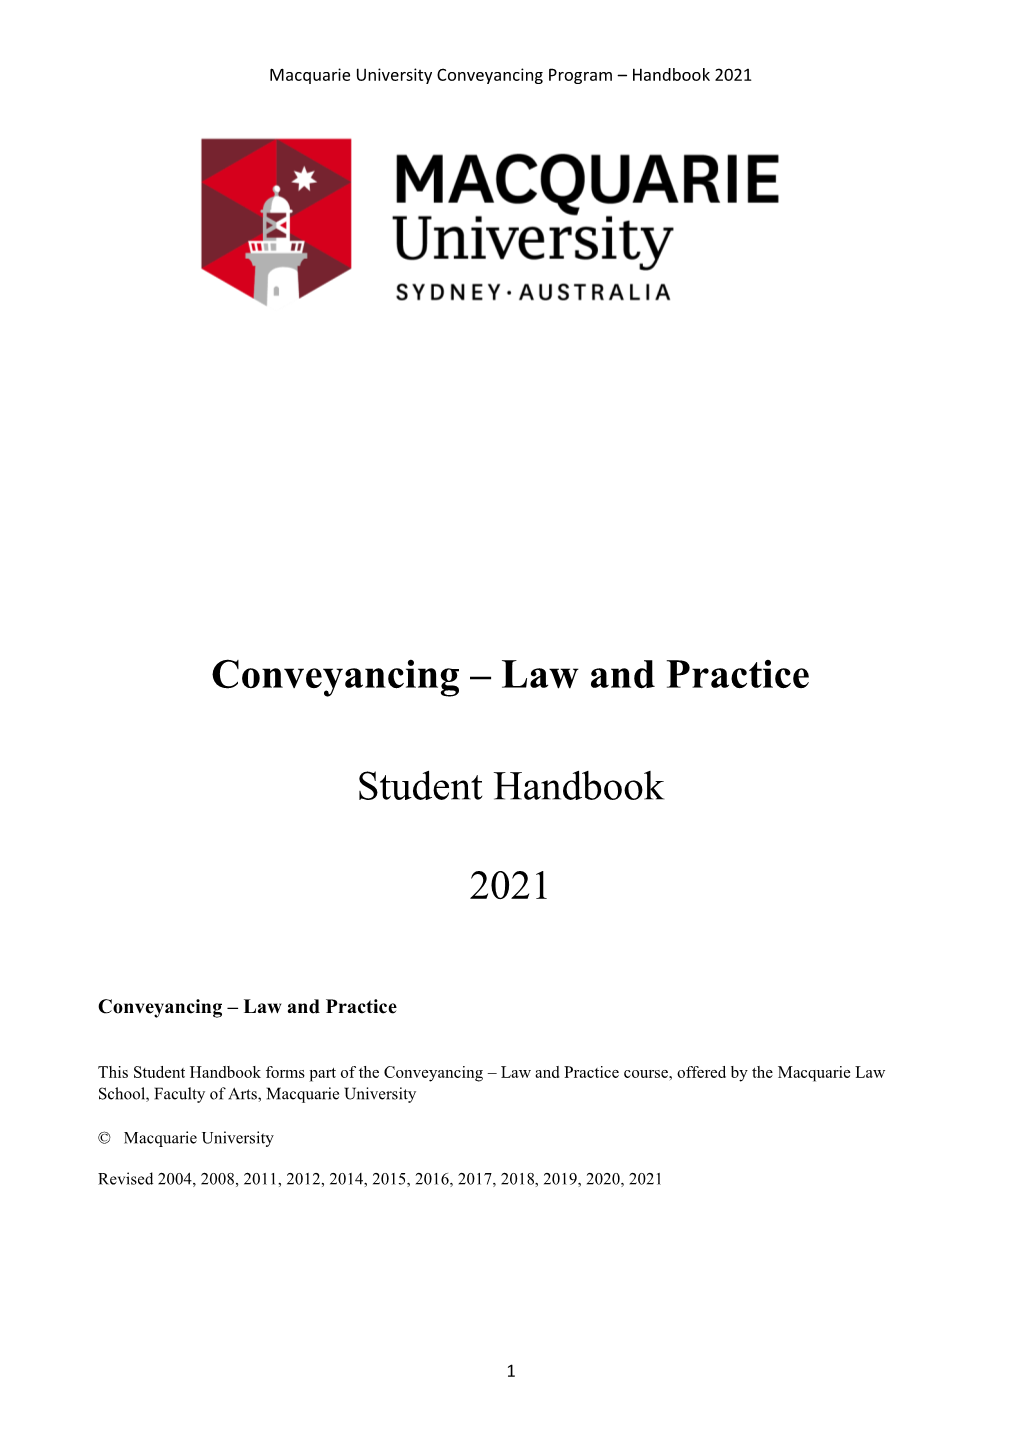 Conveyancing – Law and Practice Student Handbook 2021